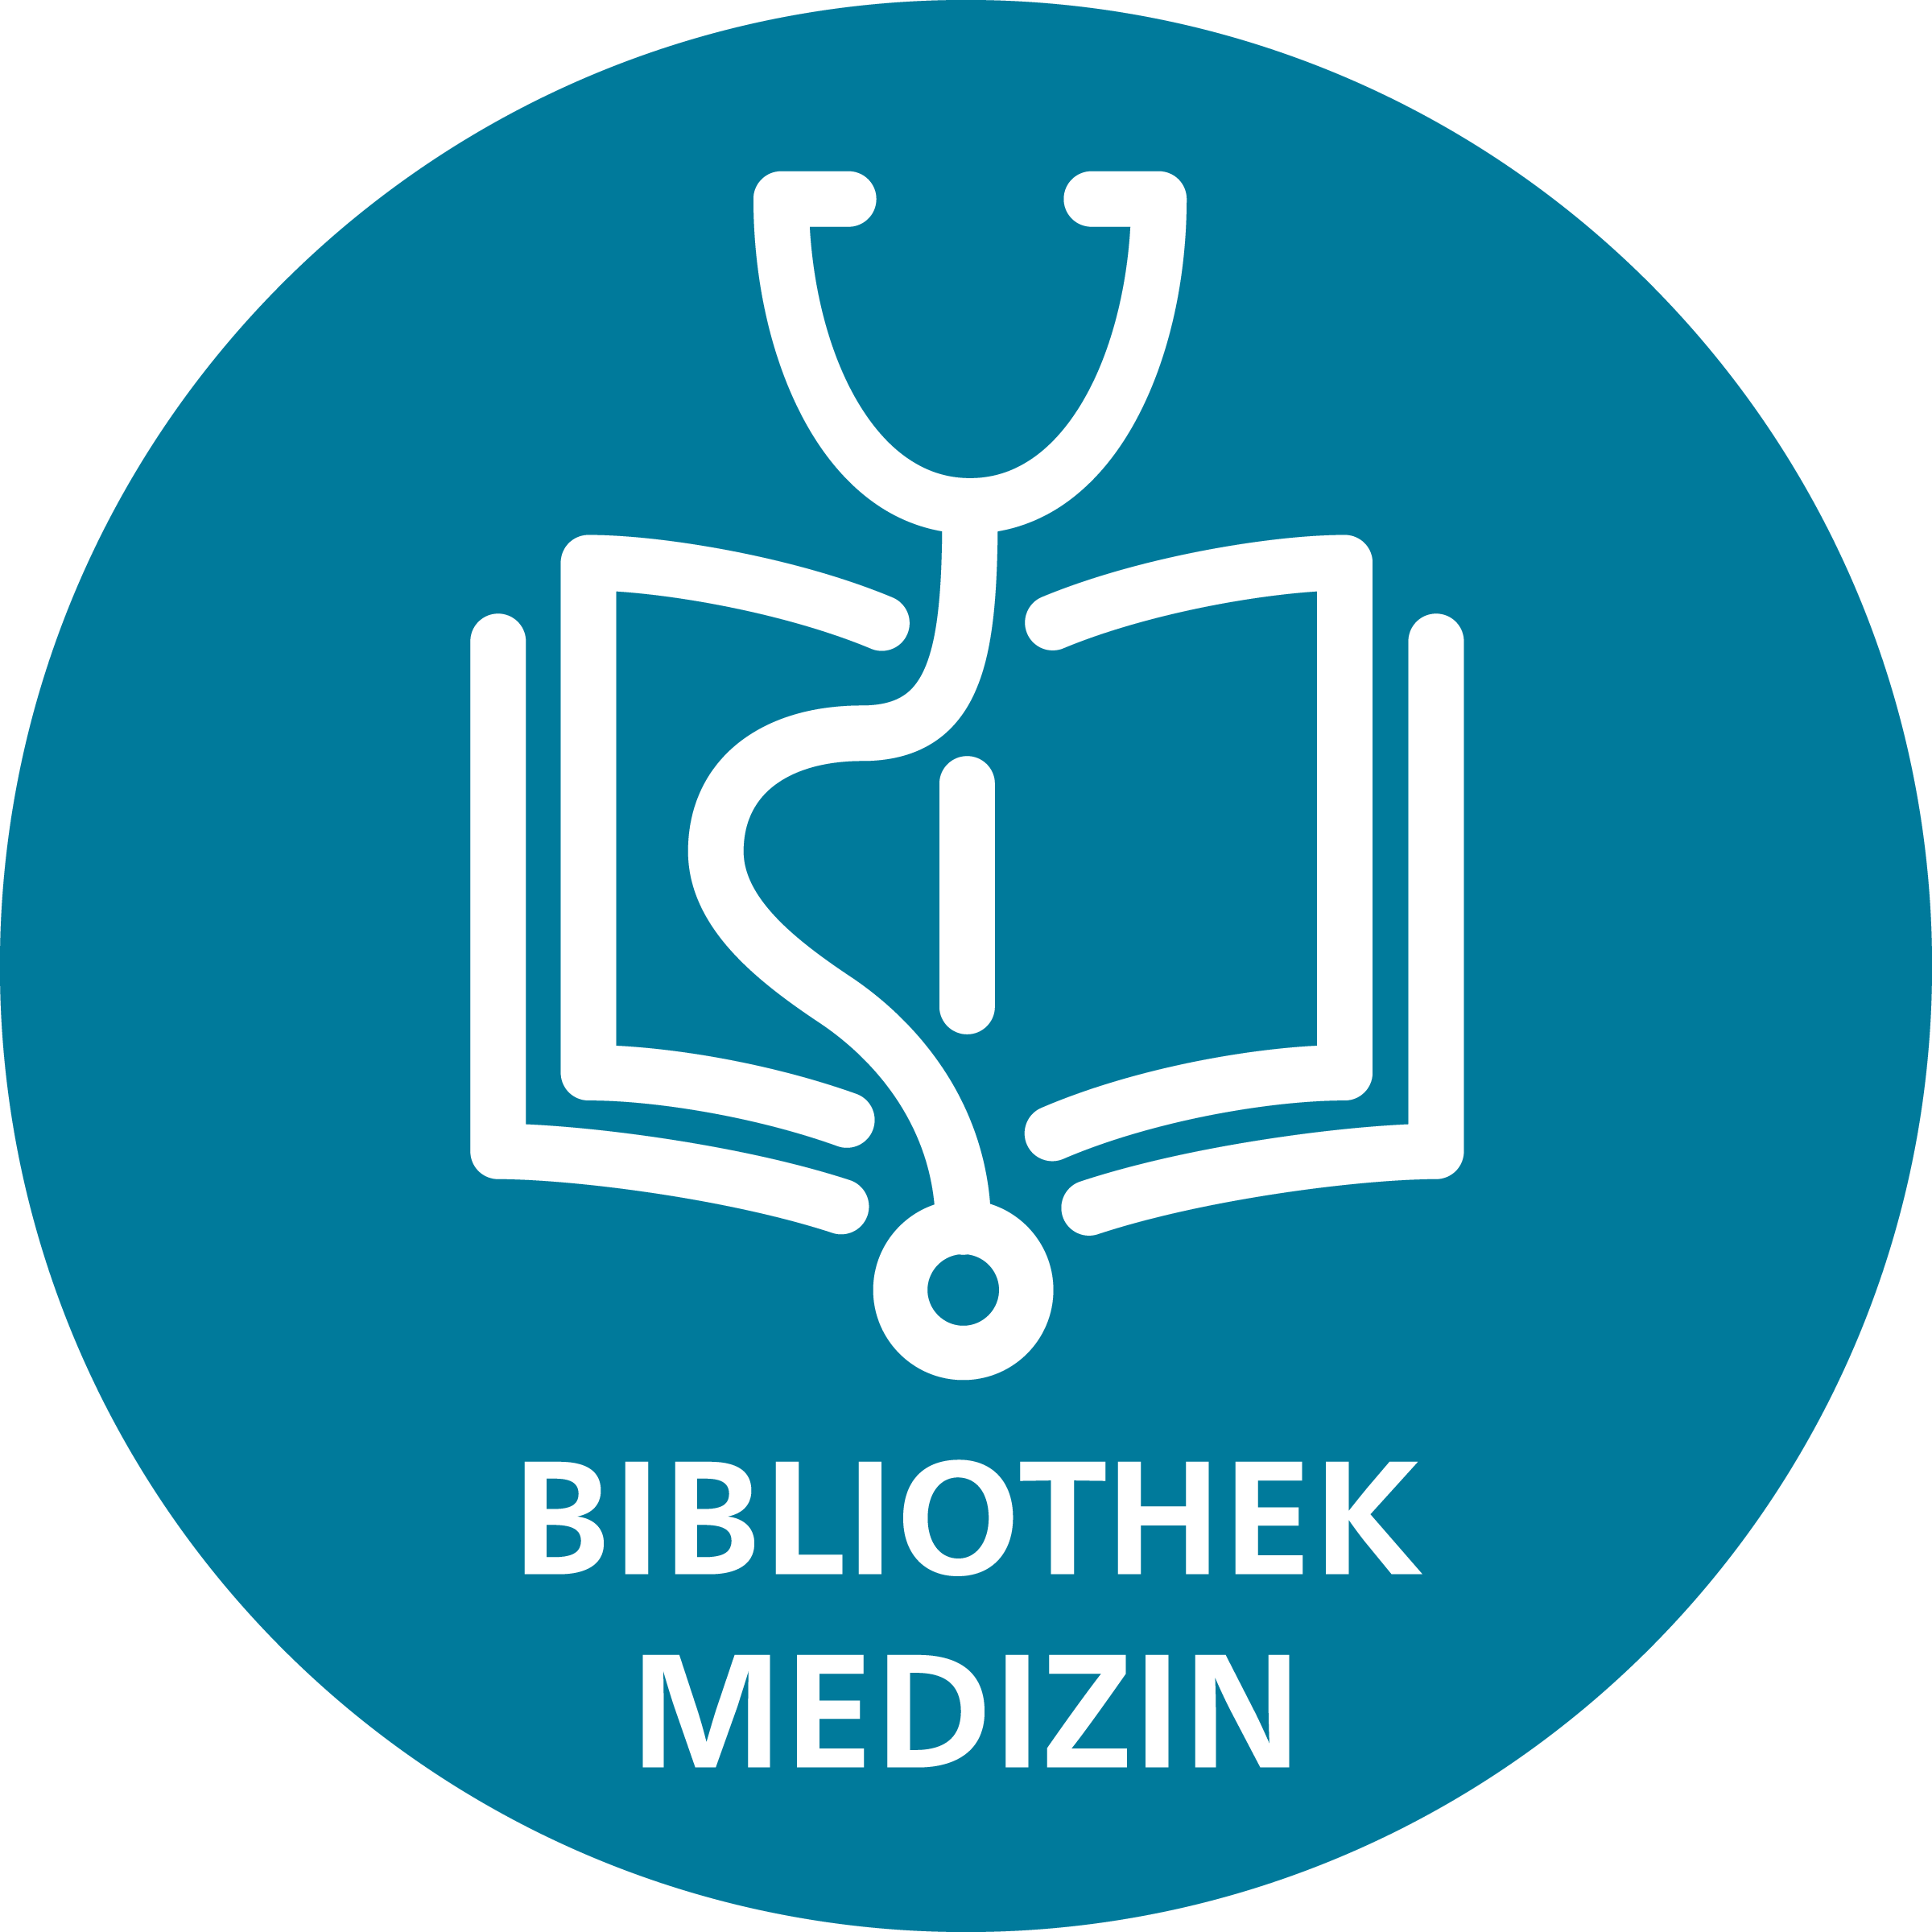 teilbibliotheken-bibliothek-medizin-universit-tsbibliothek-bern-ub